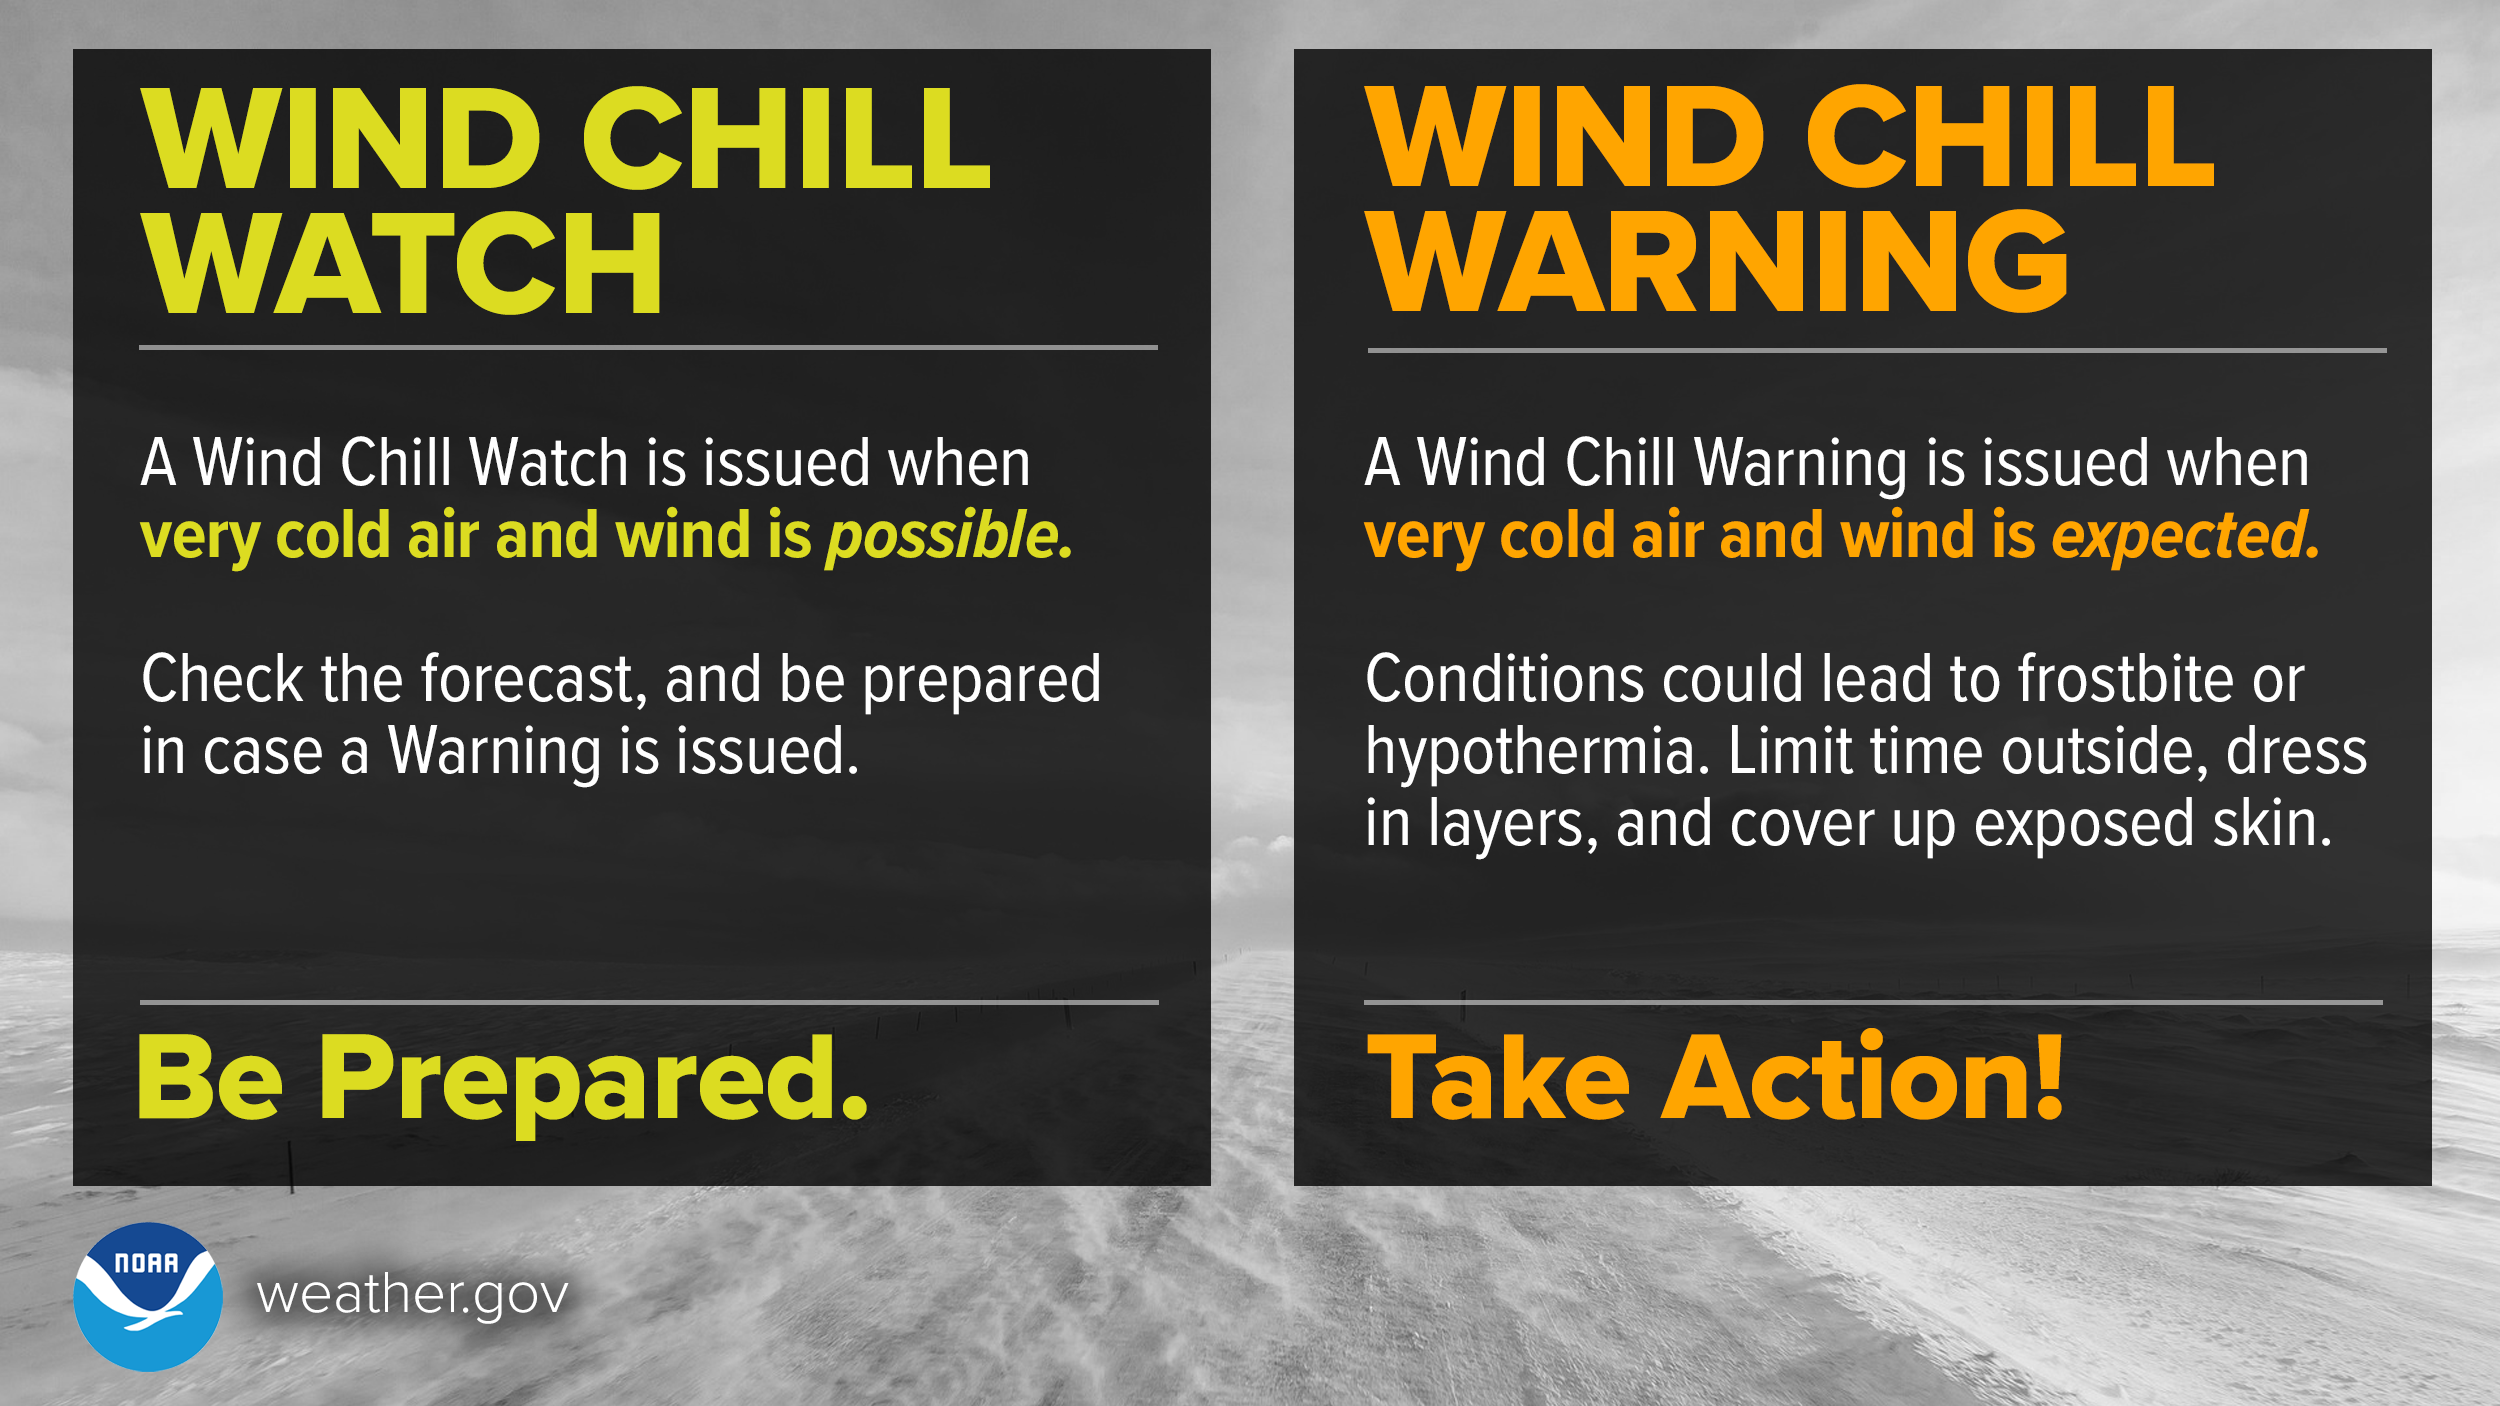 Wind Chill Watch Vs Warning